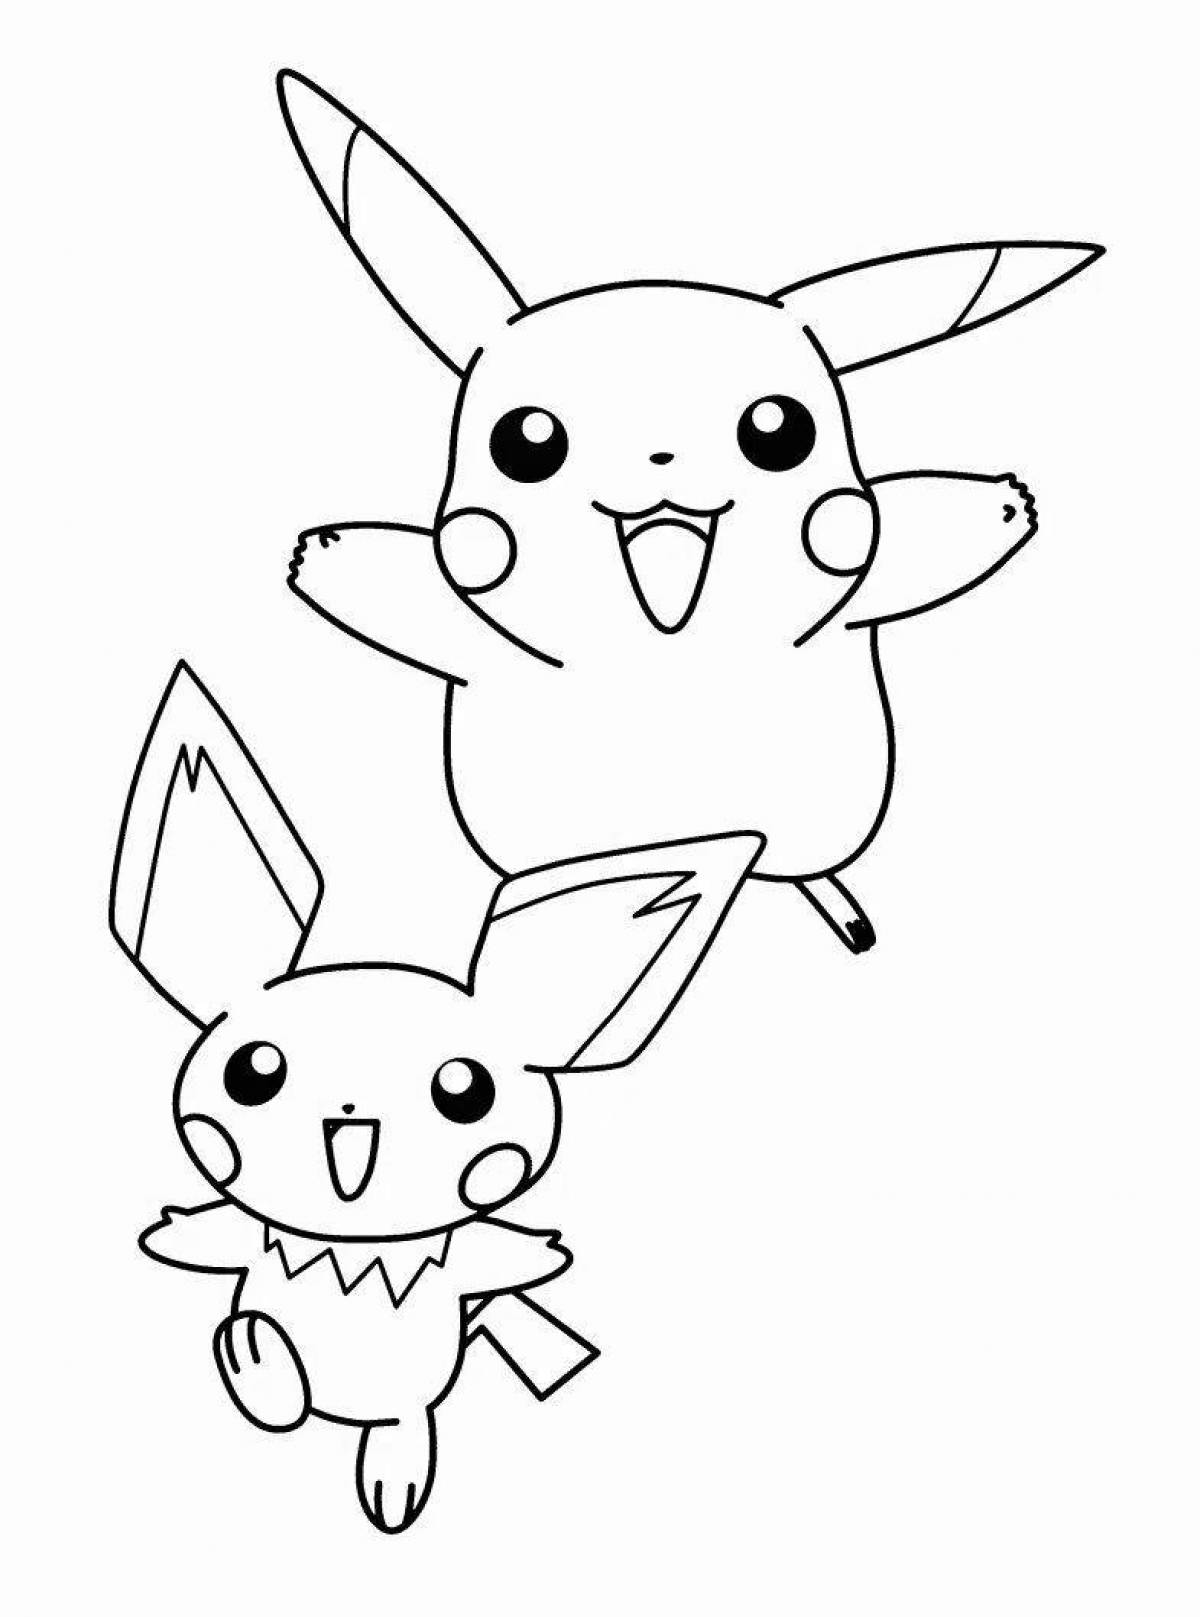 Pikachu live coloring